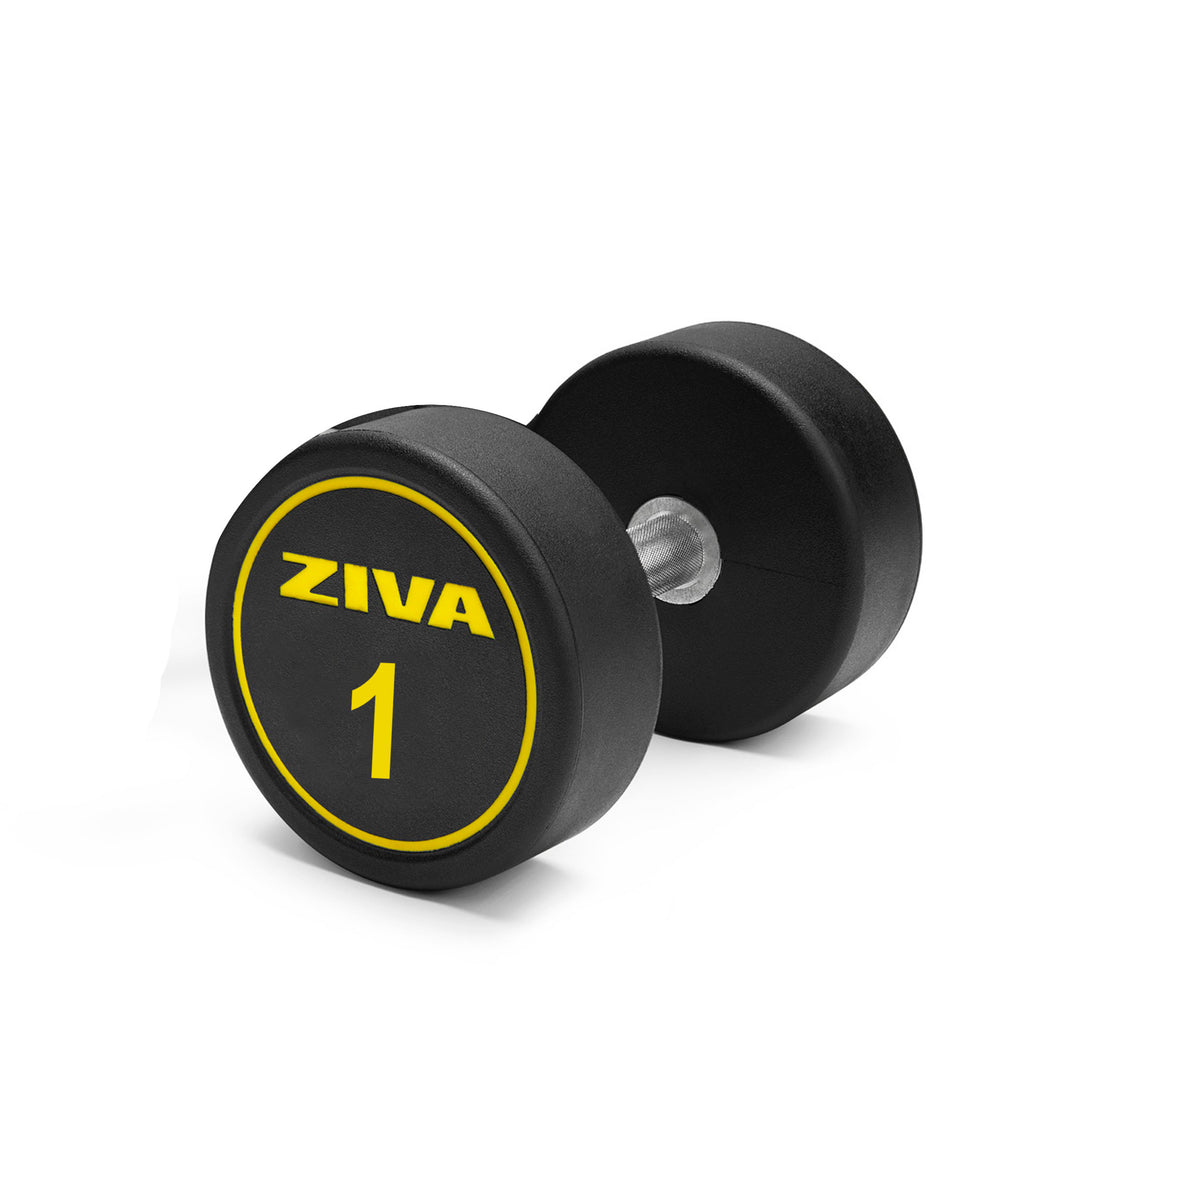 Pair of Round Dumbbells (Black/Yellow) - ZIVA Performance